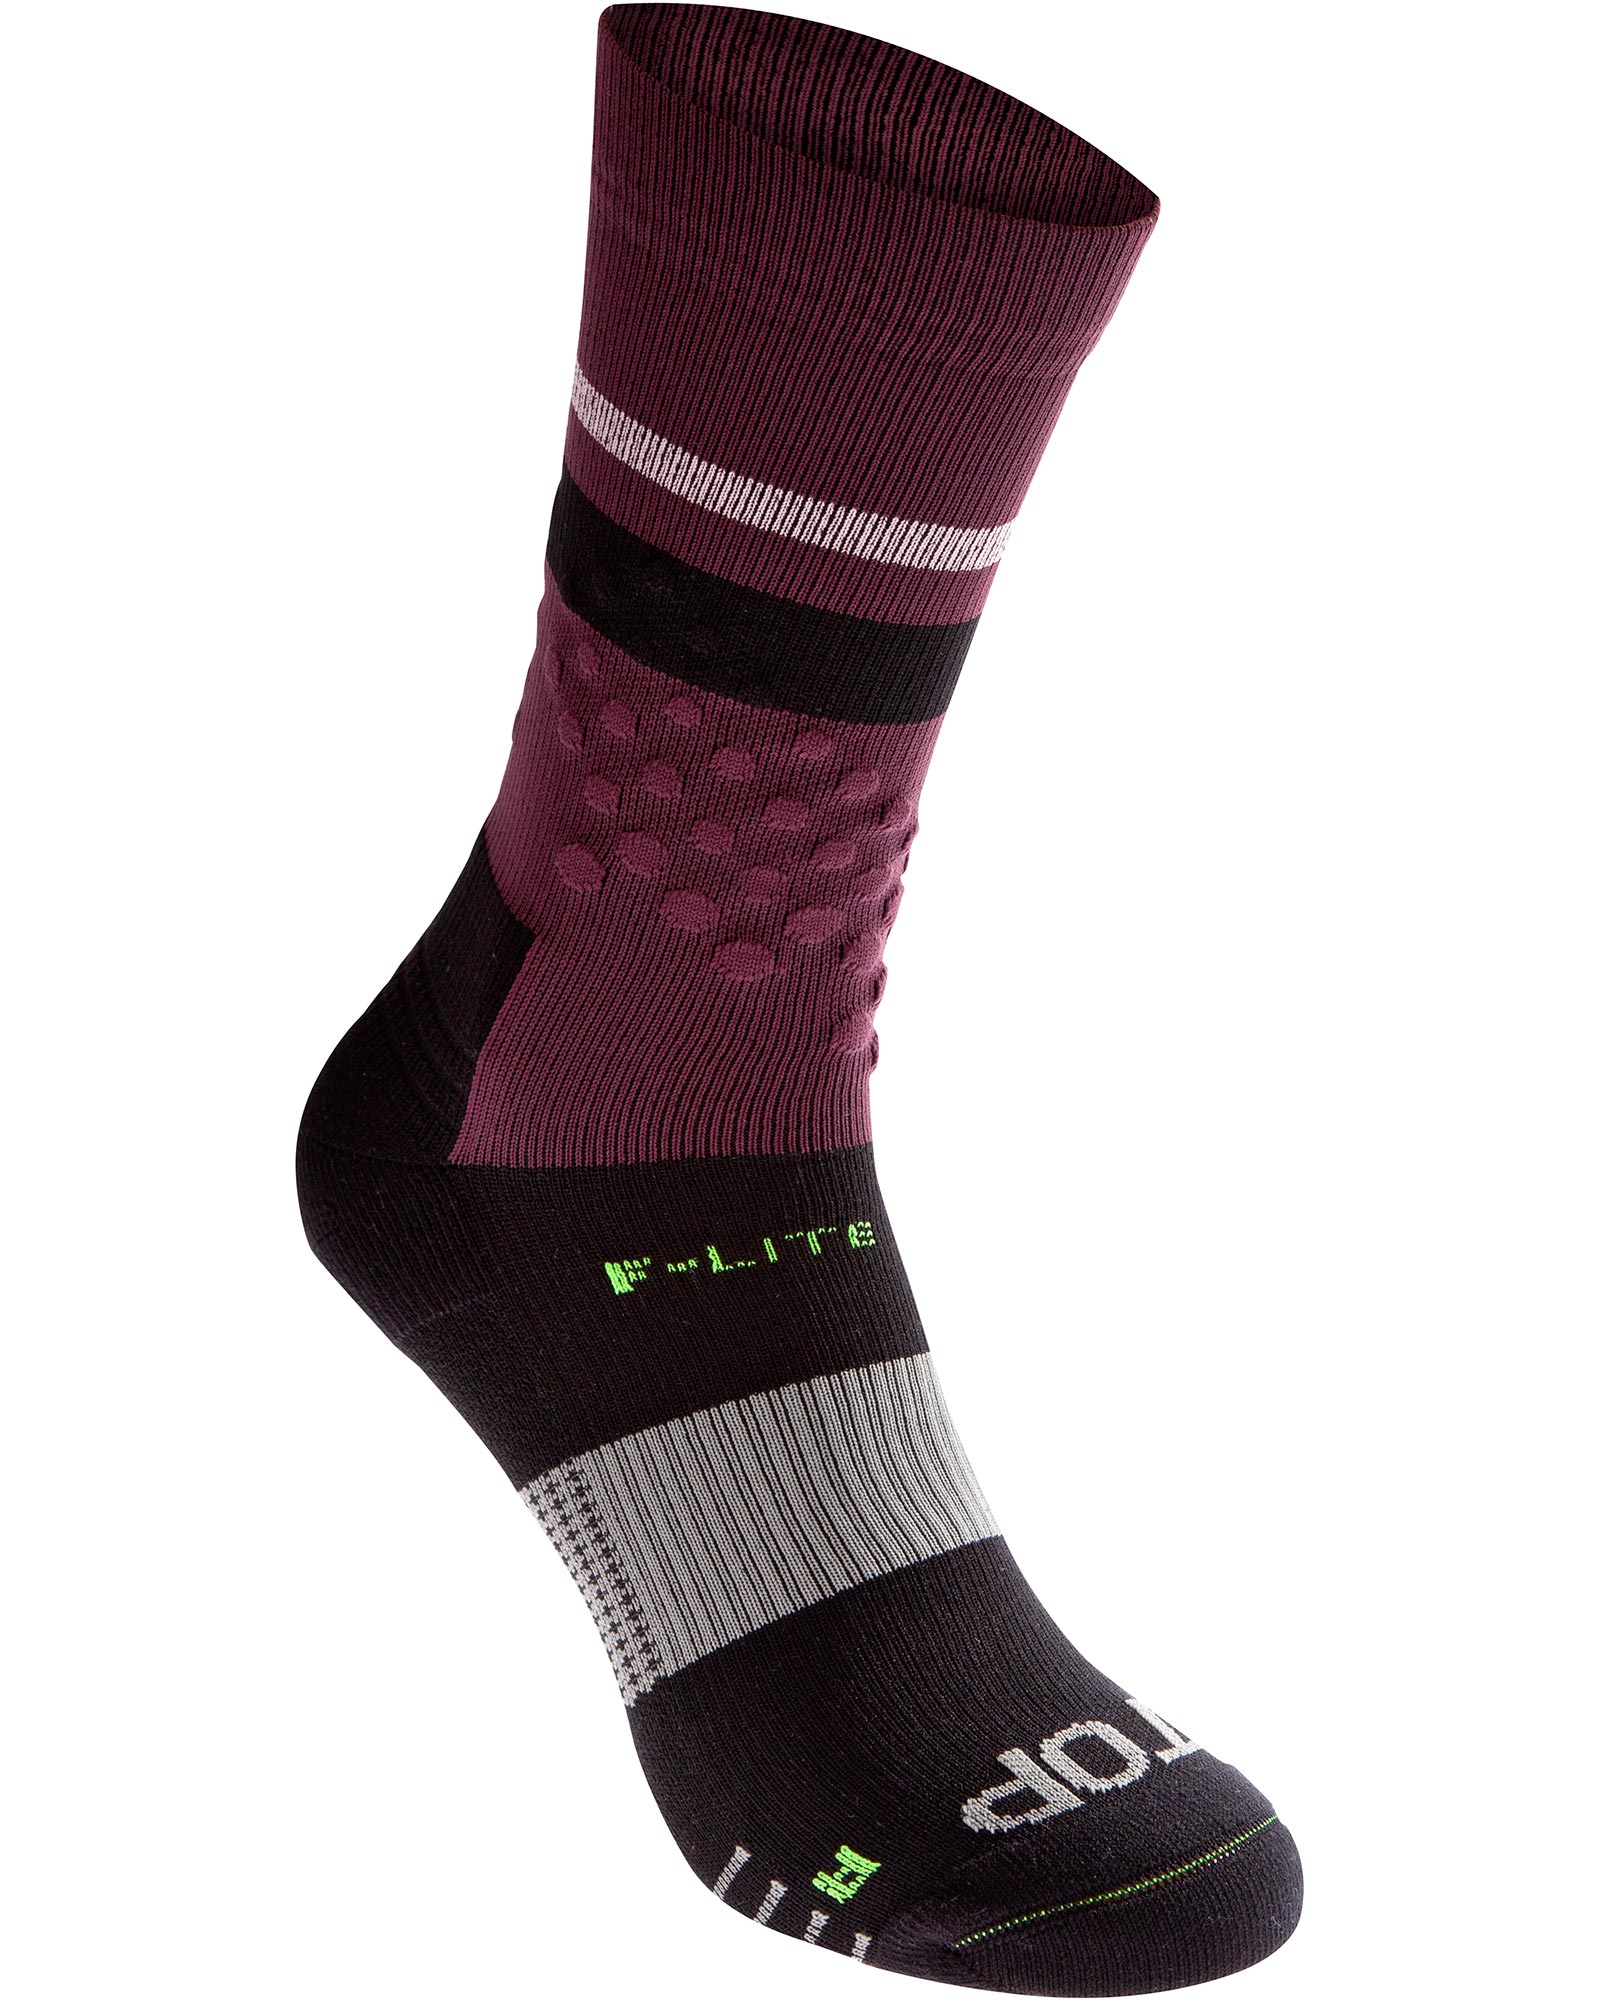 Inov 8 F Lite Crew Socks - Purple/Black M